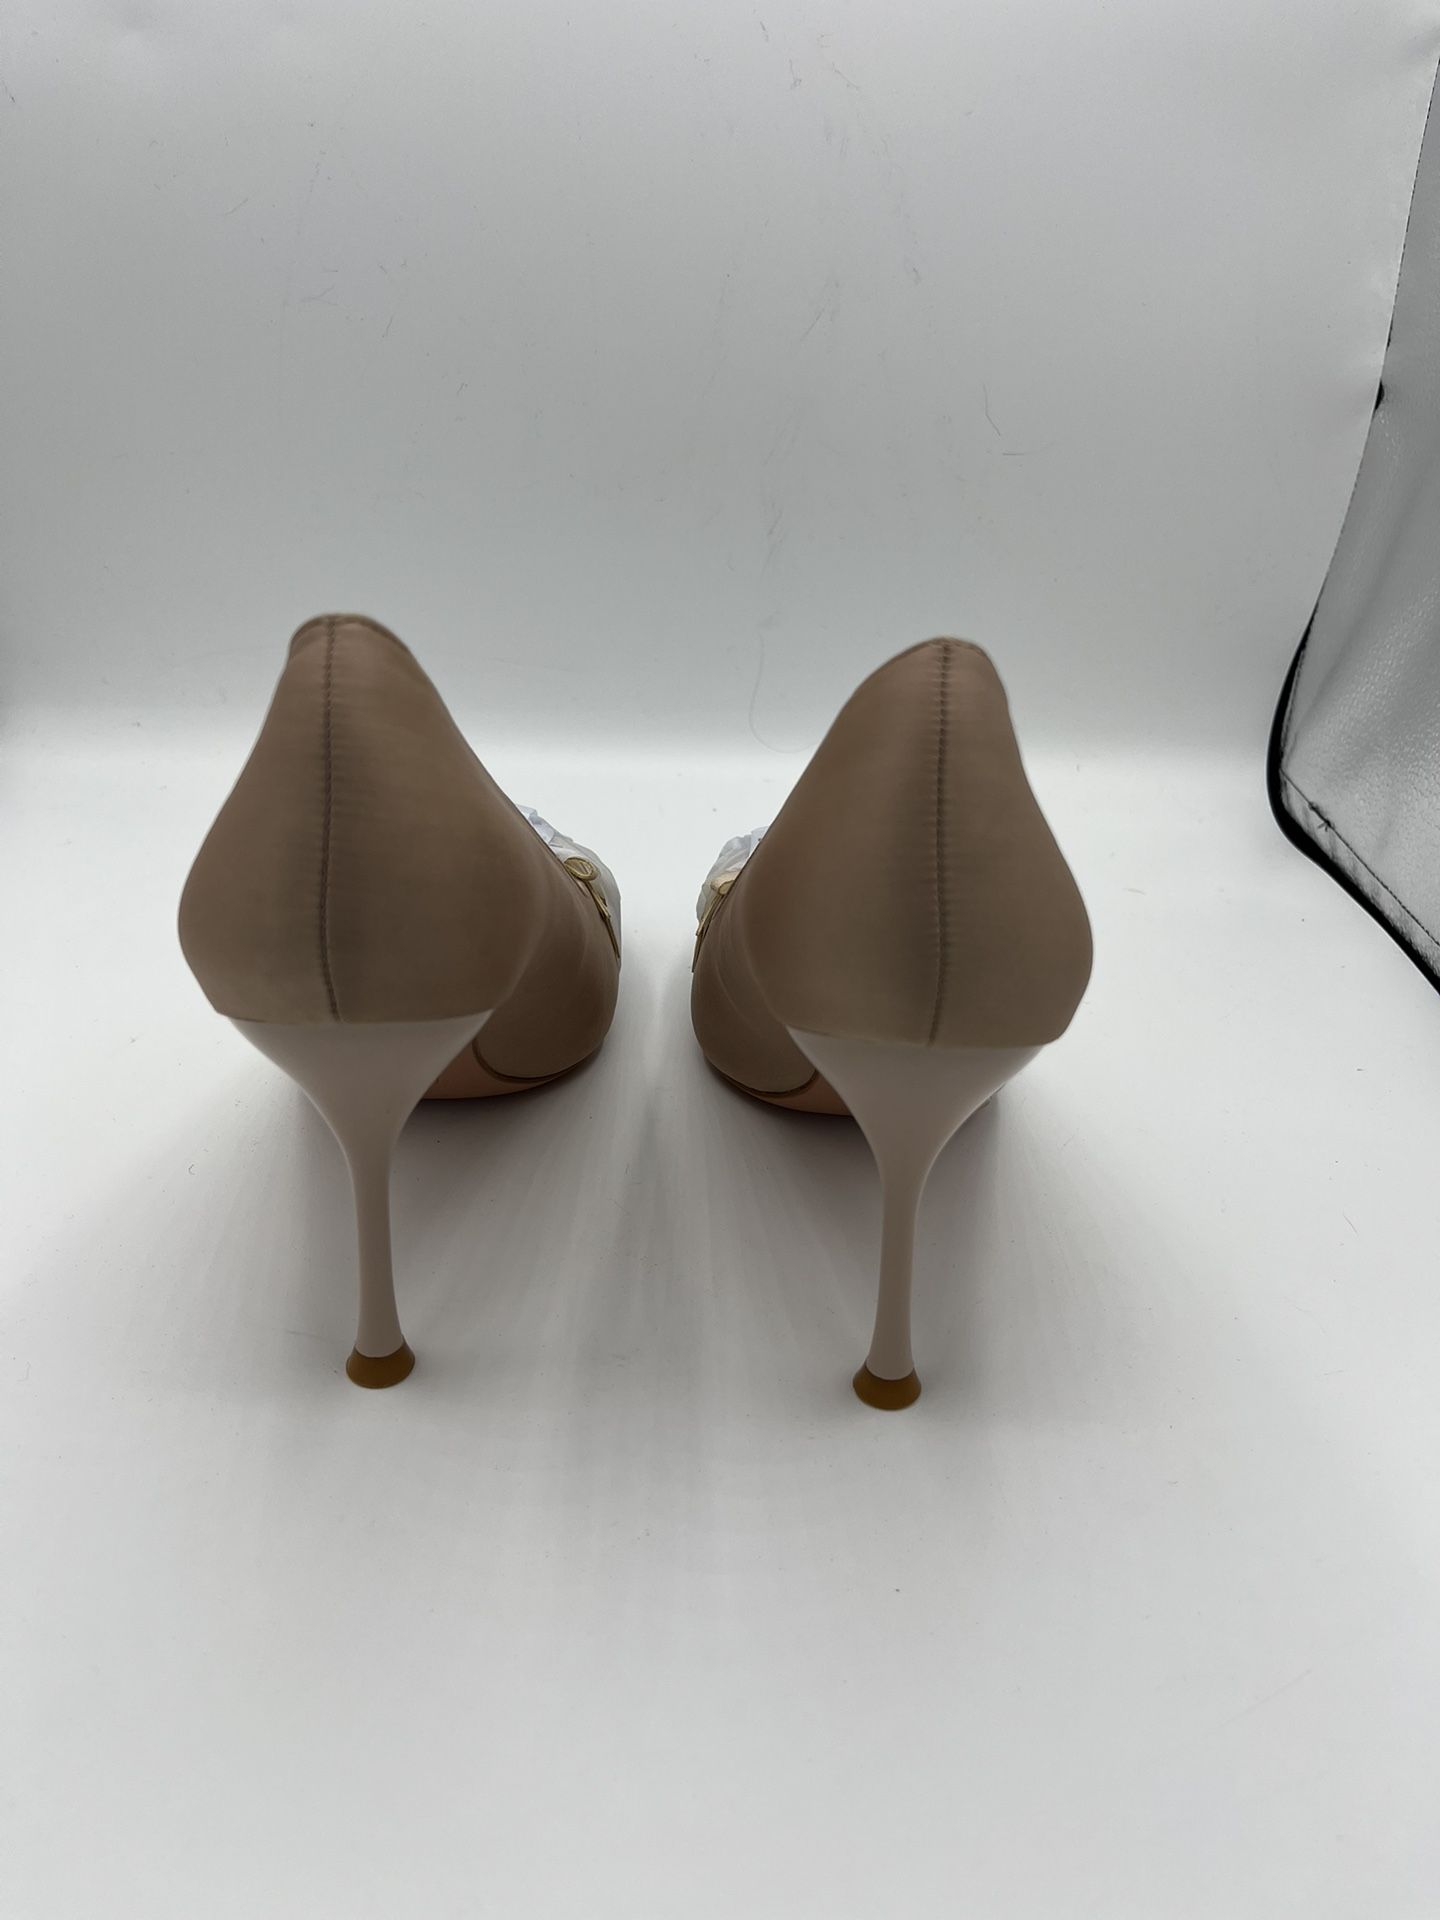 Coutgo Women's Pointed Toe Stiletto Satin Shoes Khaki Color Size 8